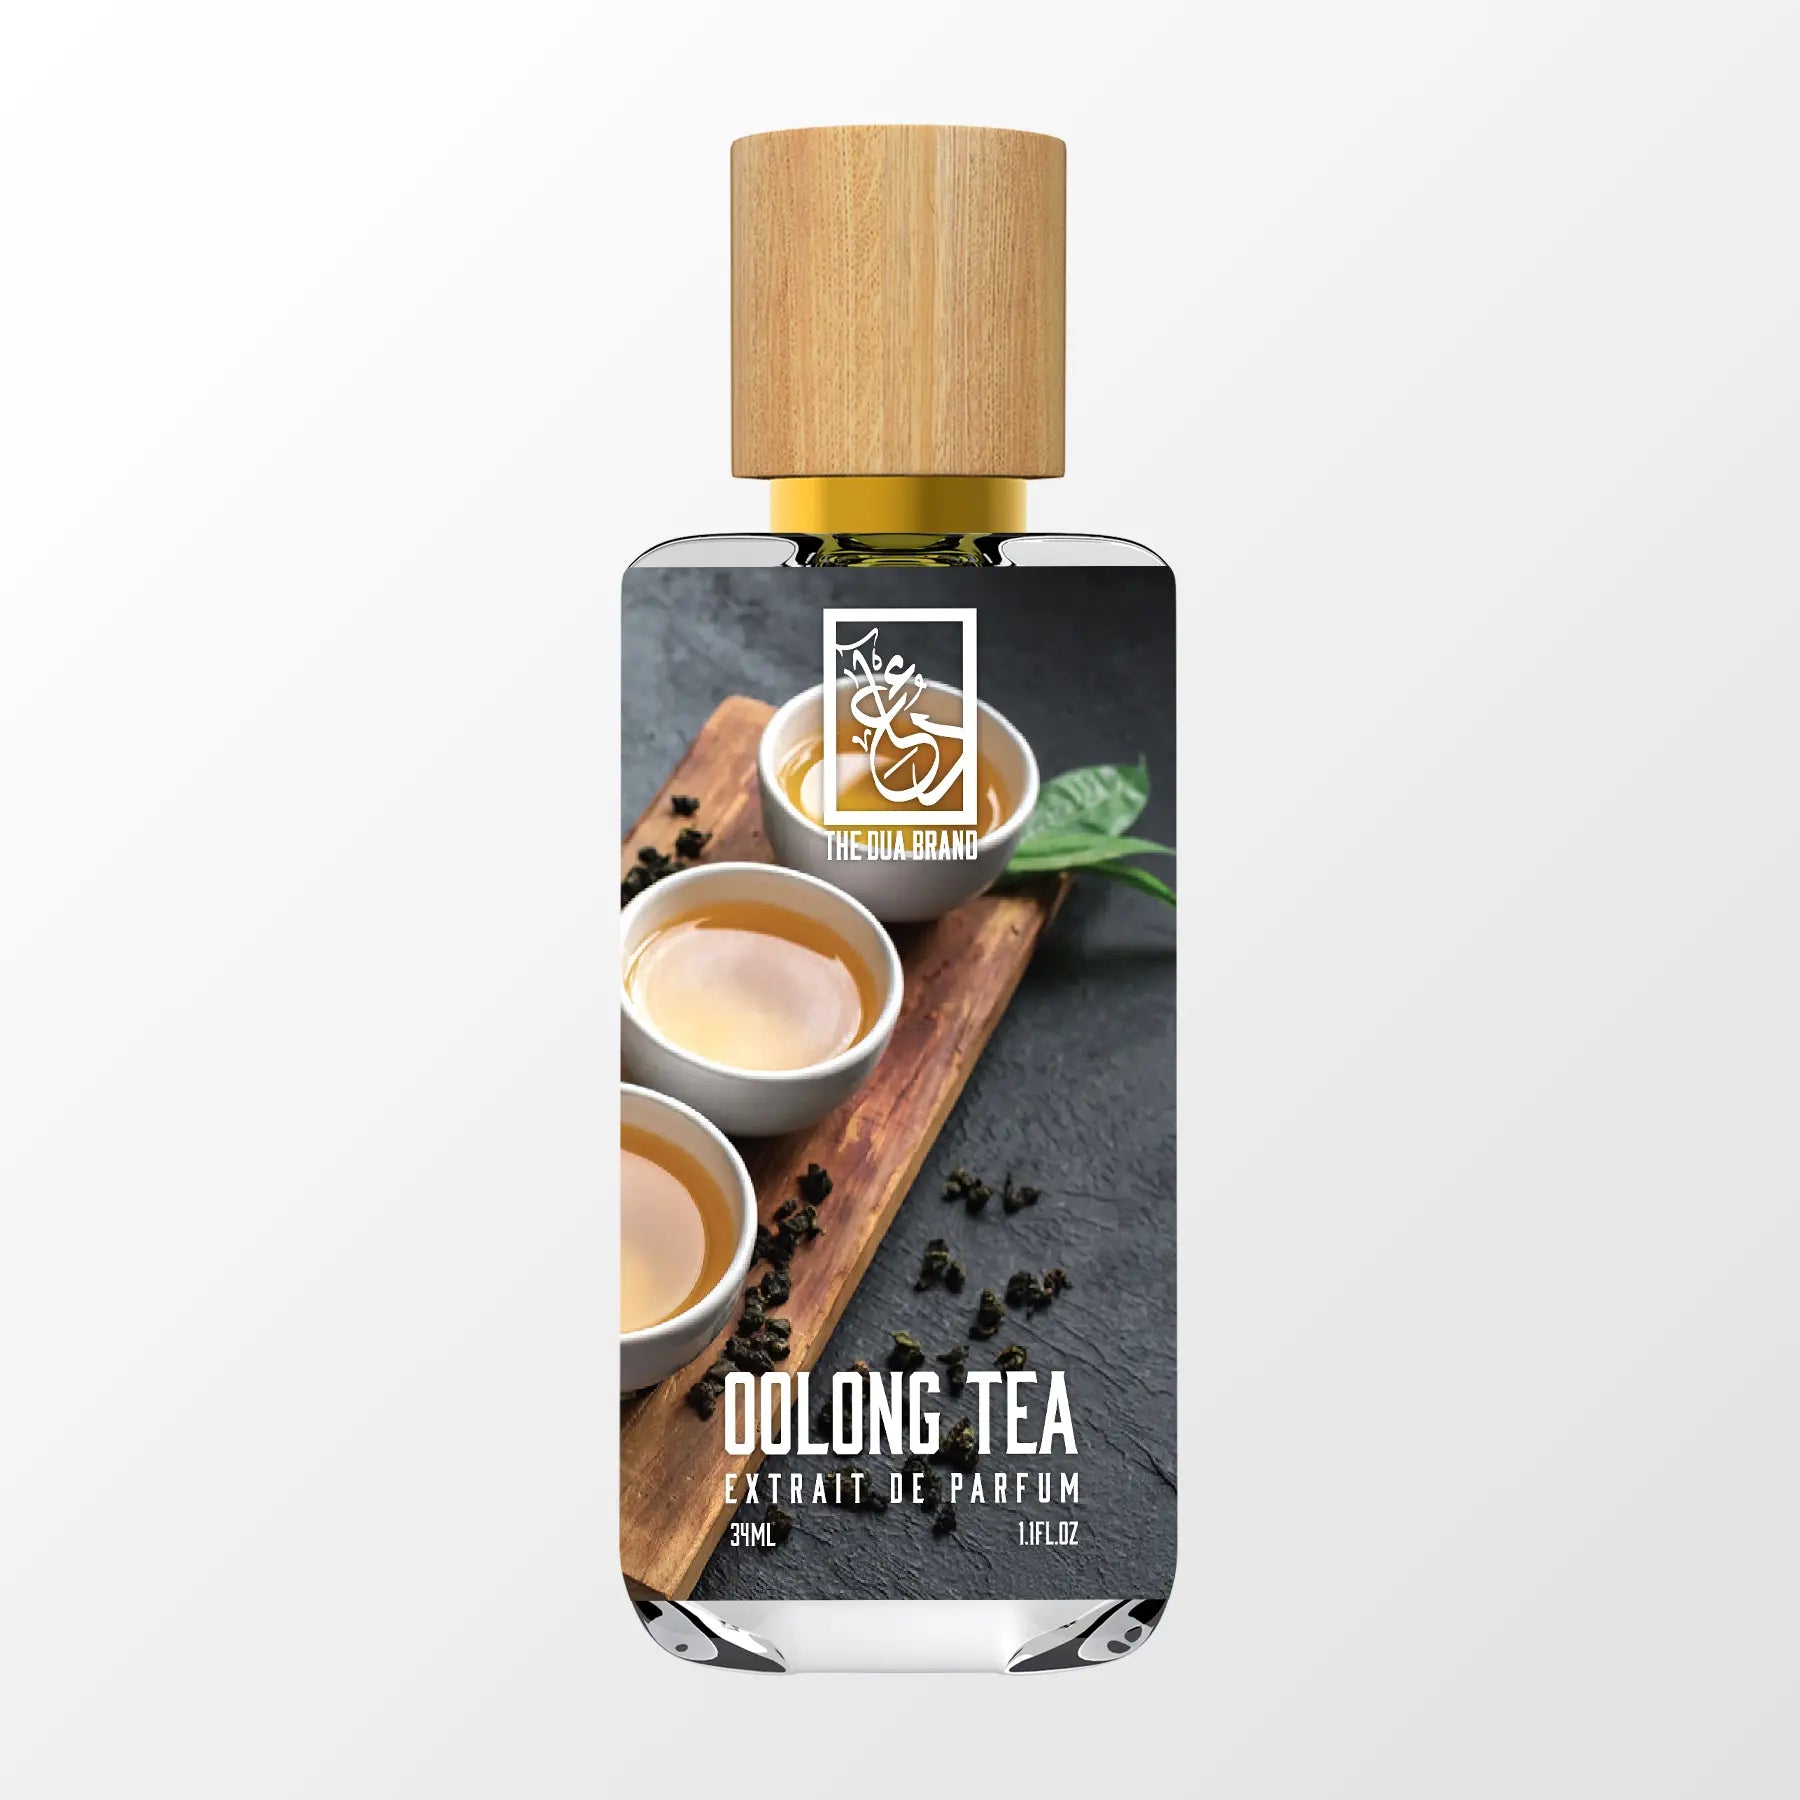 oolong-tea-front